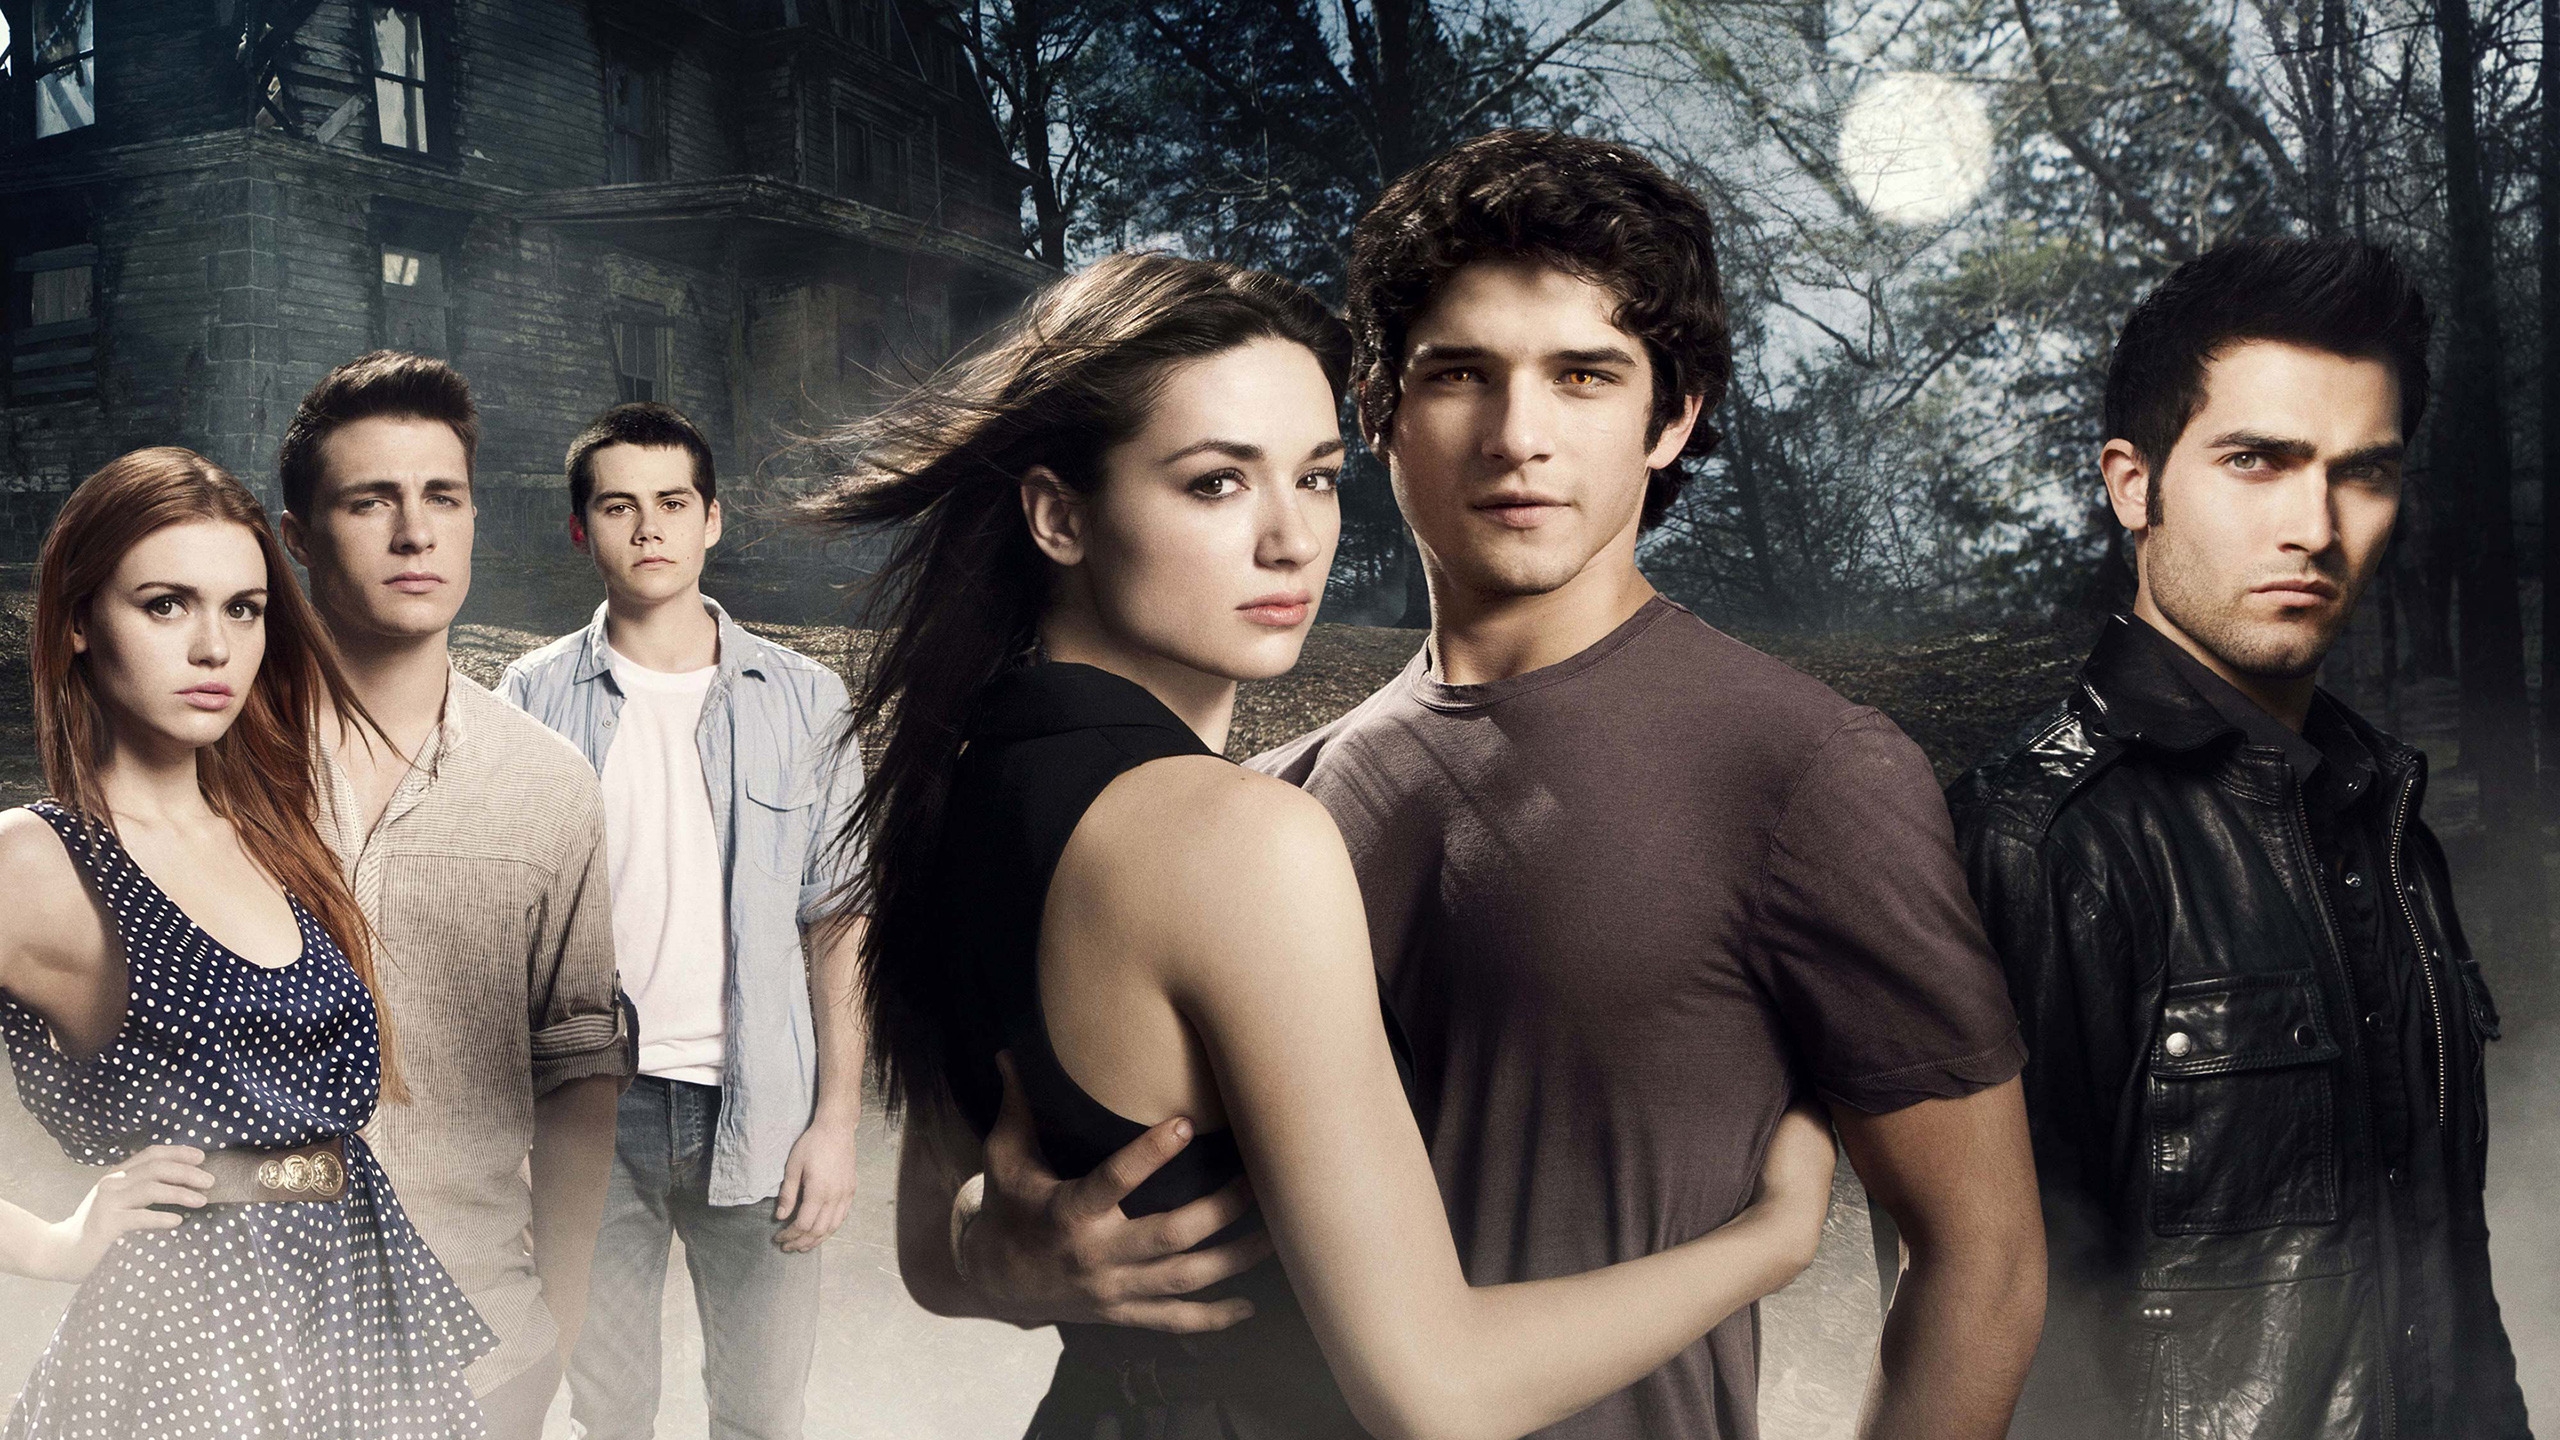 Teen Wolf Season 2 for 2560x1440 HDTV resolution